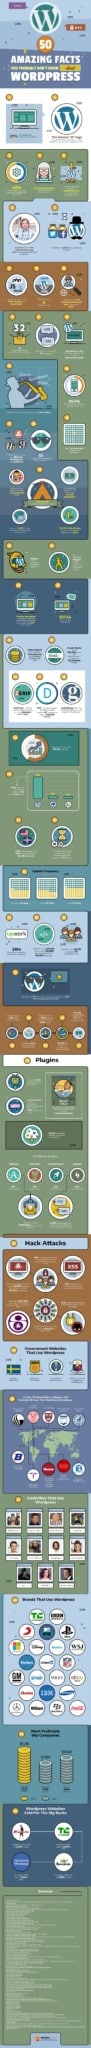 Wordpress Benefits Infographic